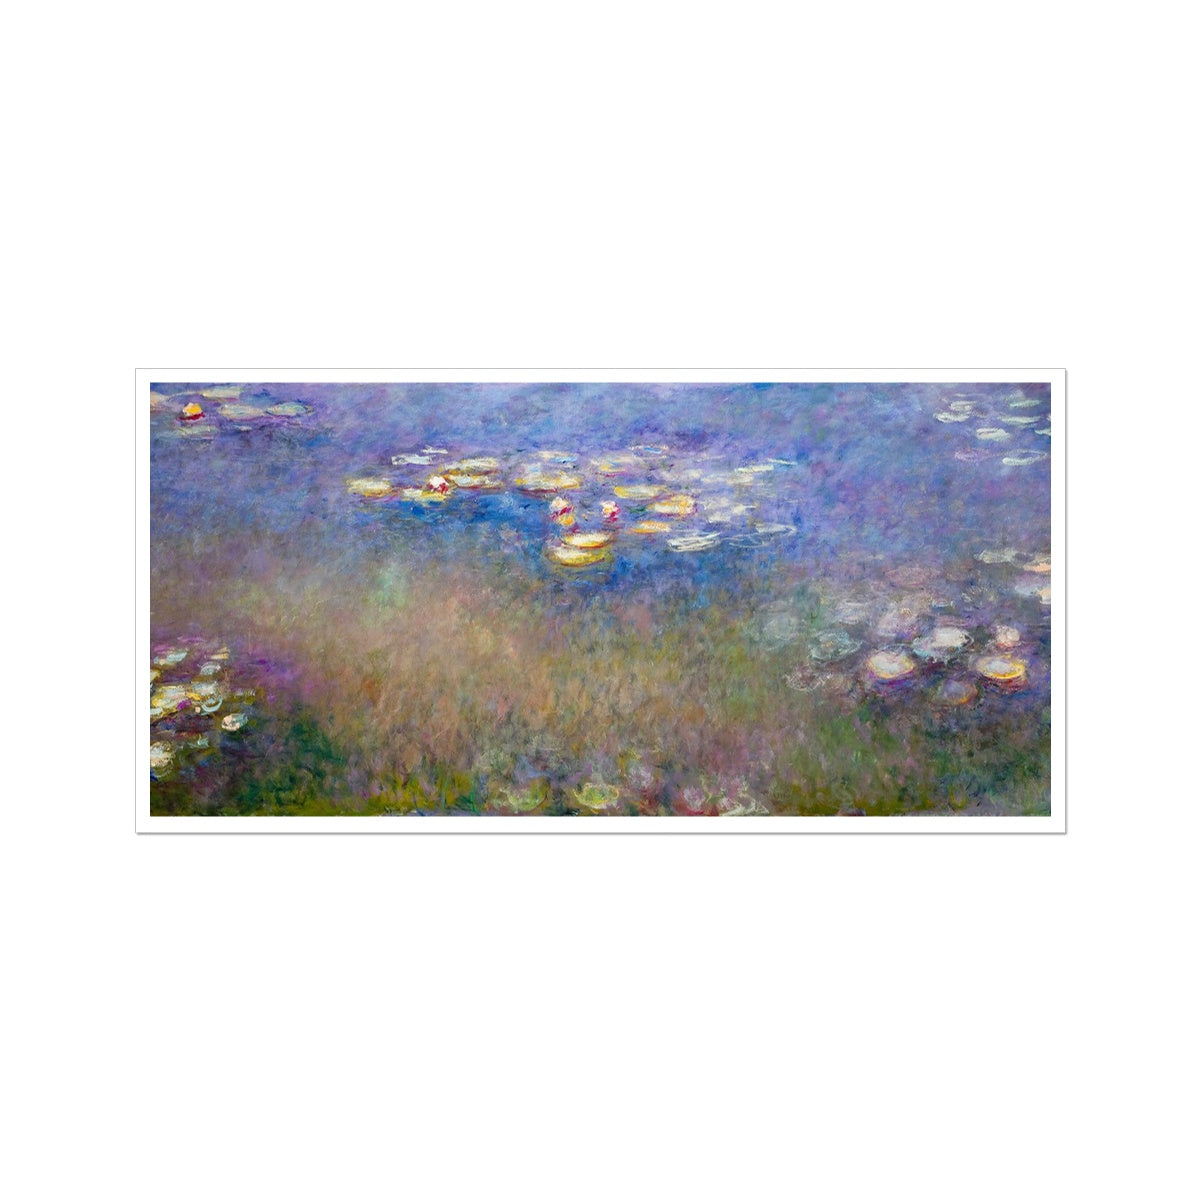 'Water Lilies' by Claude Monet. Open Edition Fine Art Print. Historic Art